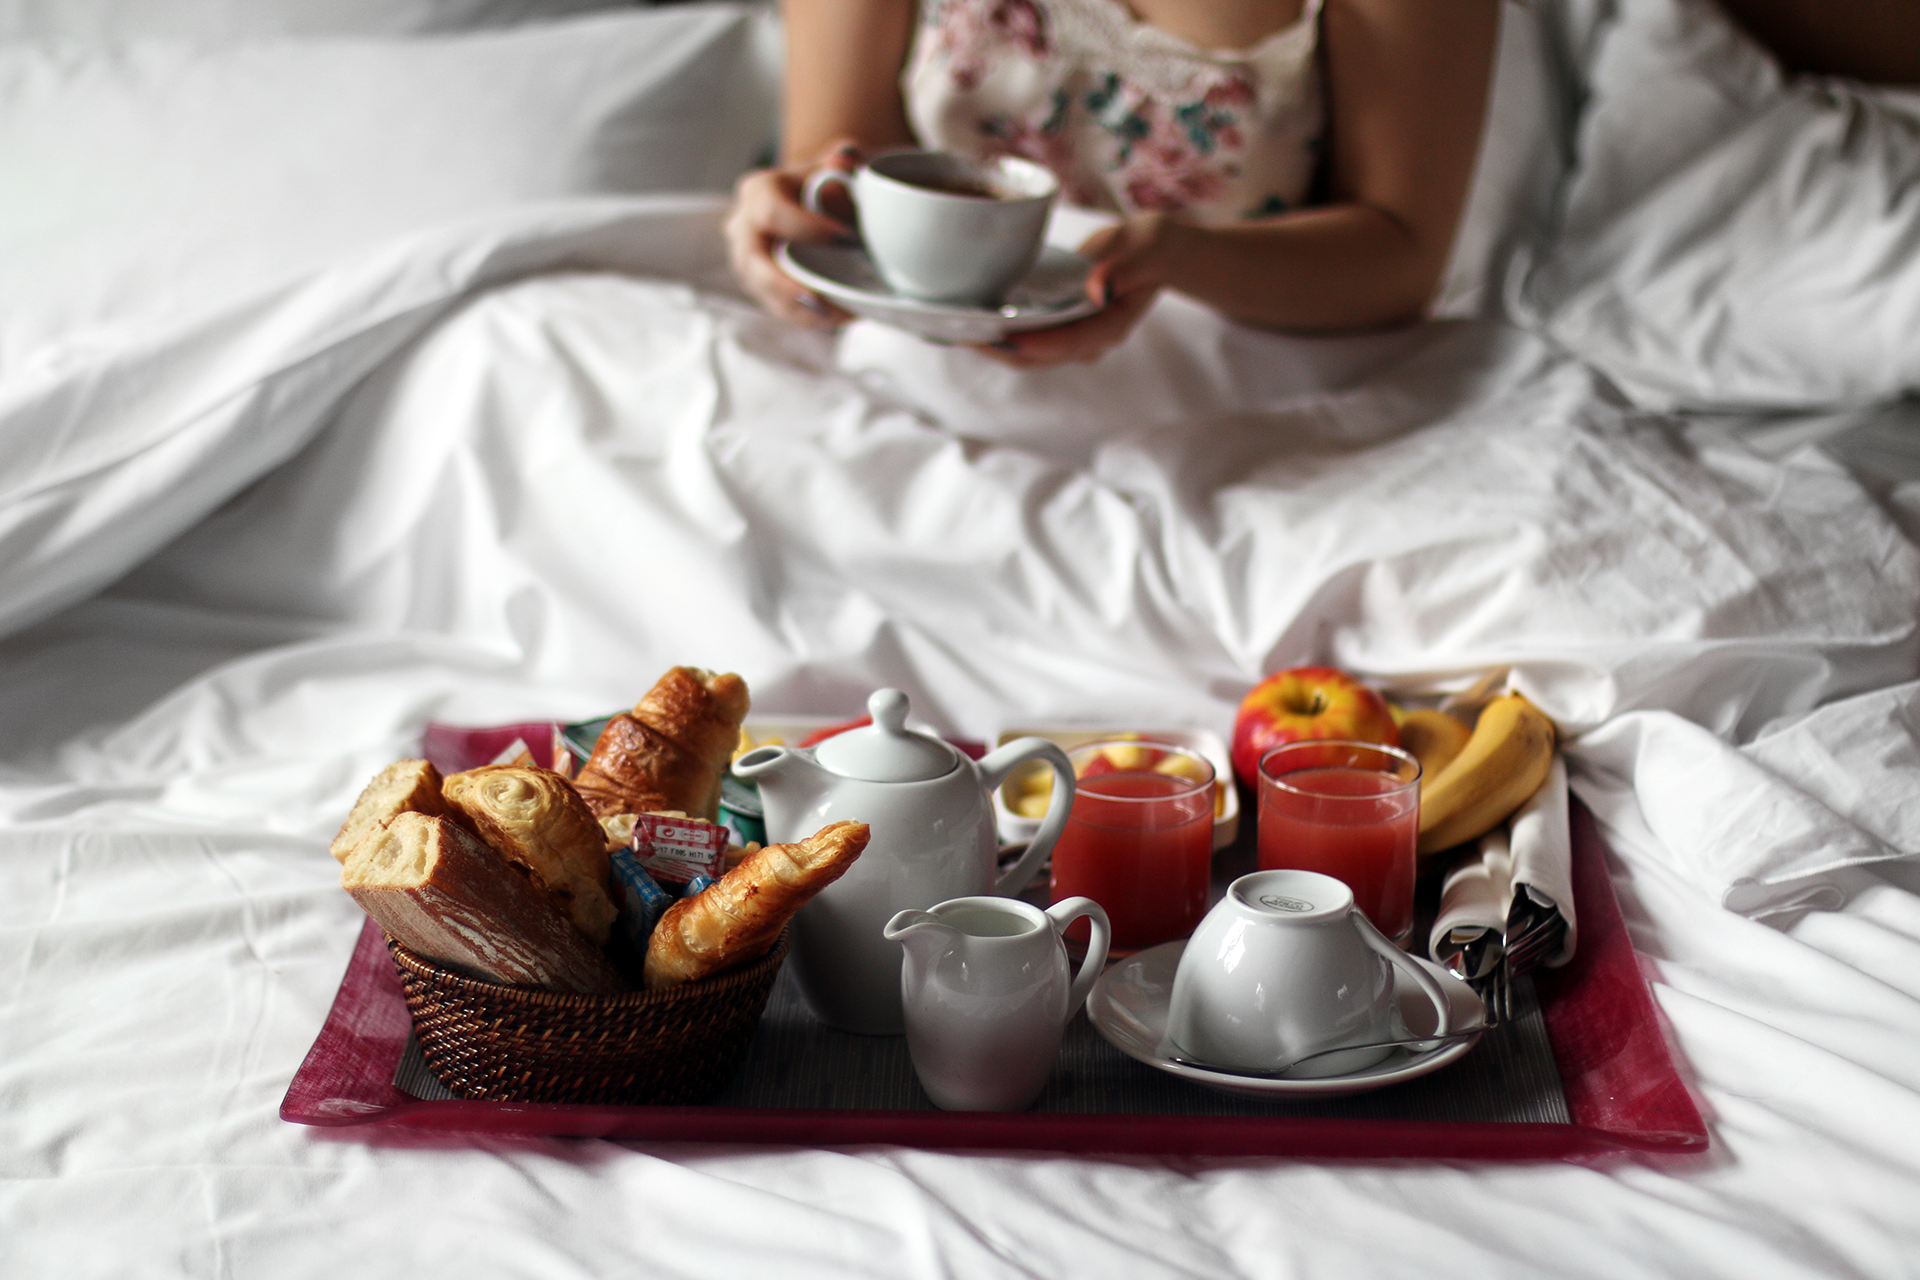 Спать после завтрака. Завтрак в постель. Кофе в постель. Завтрак с любимым. Кофе в постель любимому.